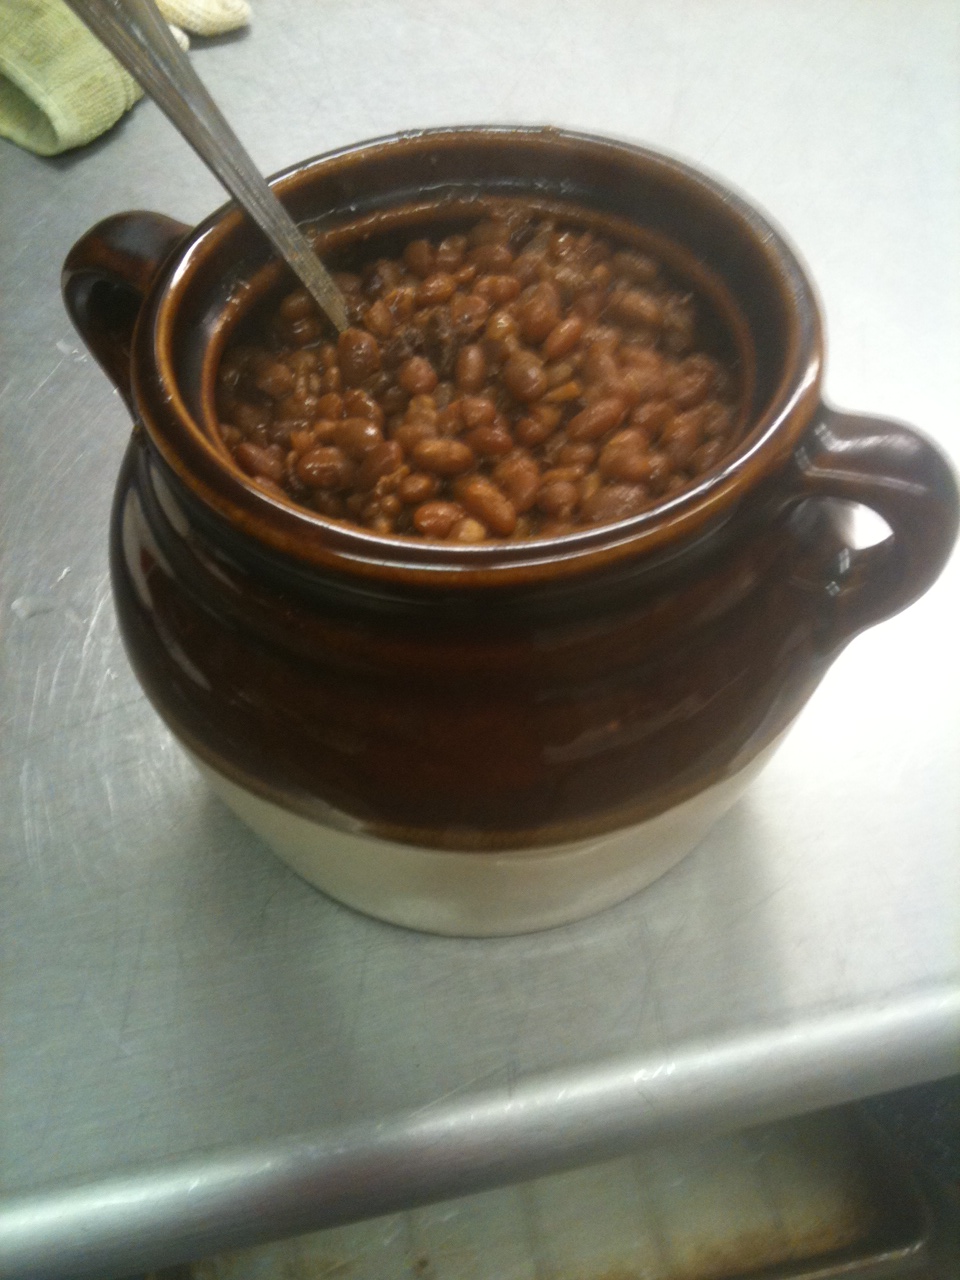 https://narnianchef.files.wordpress.com/2012/06/boston-baked-beans-00.jpg